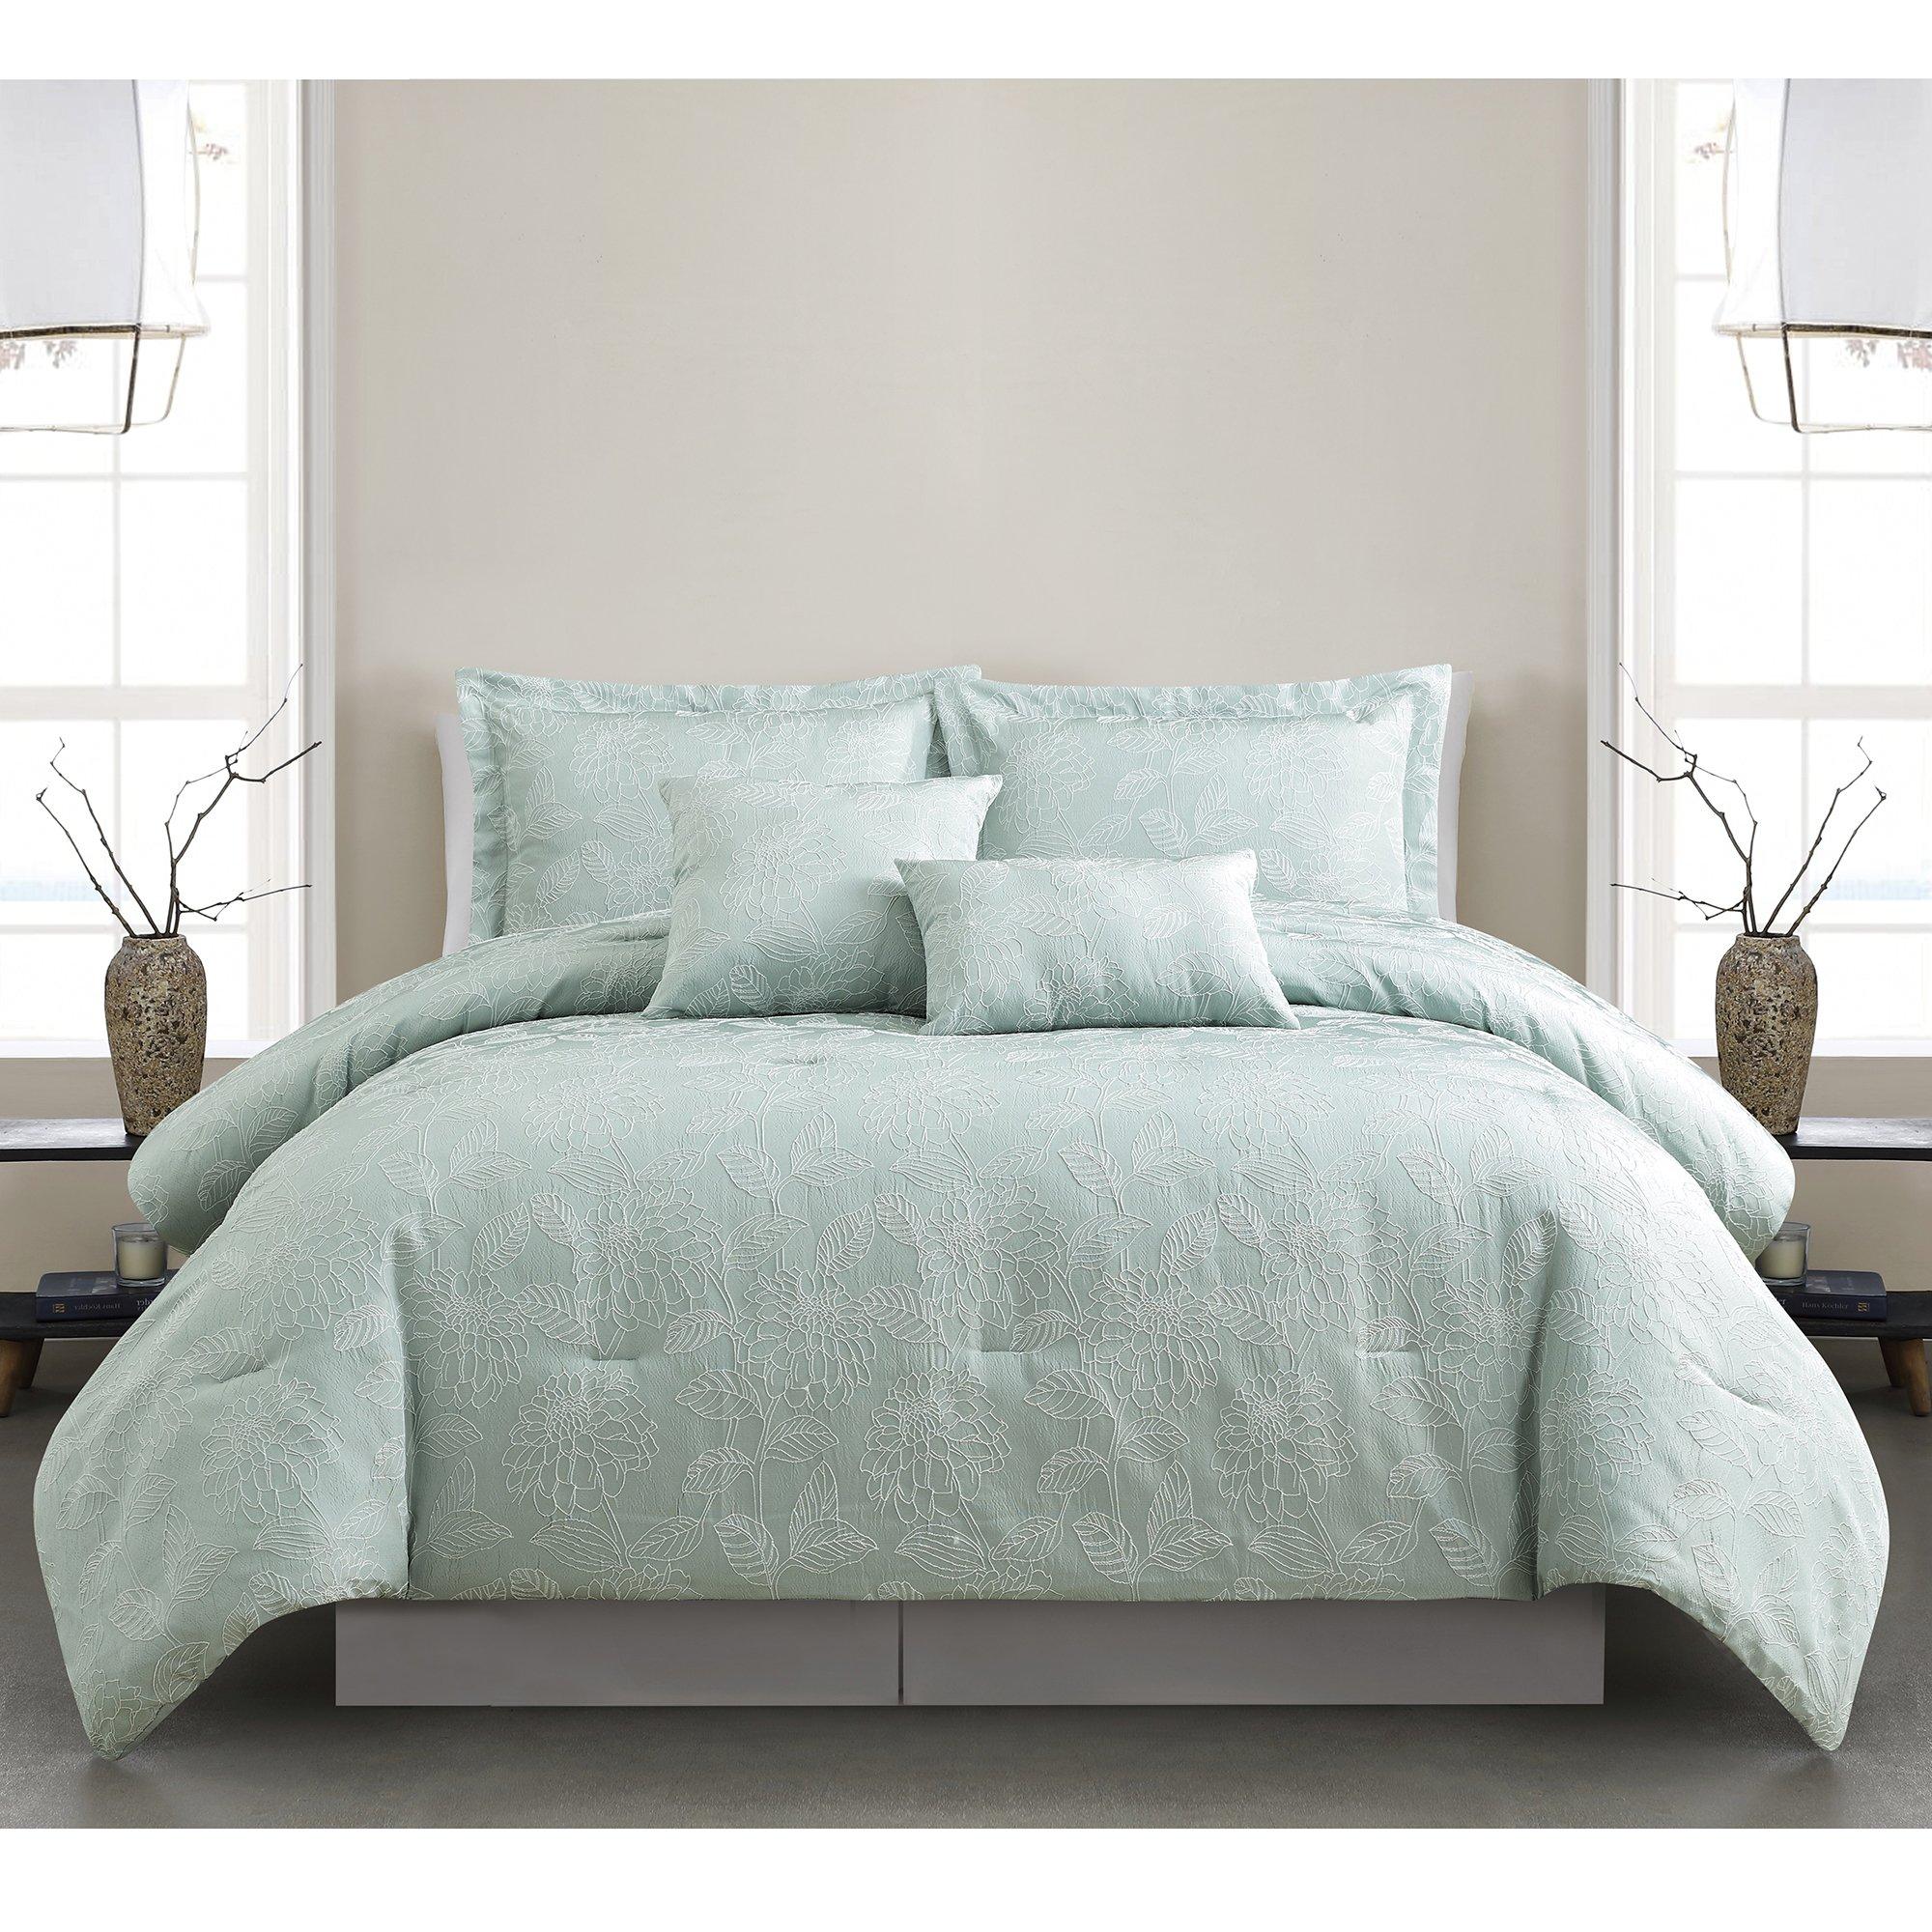 The Elegant Home 5 Pc Comforter Set